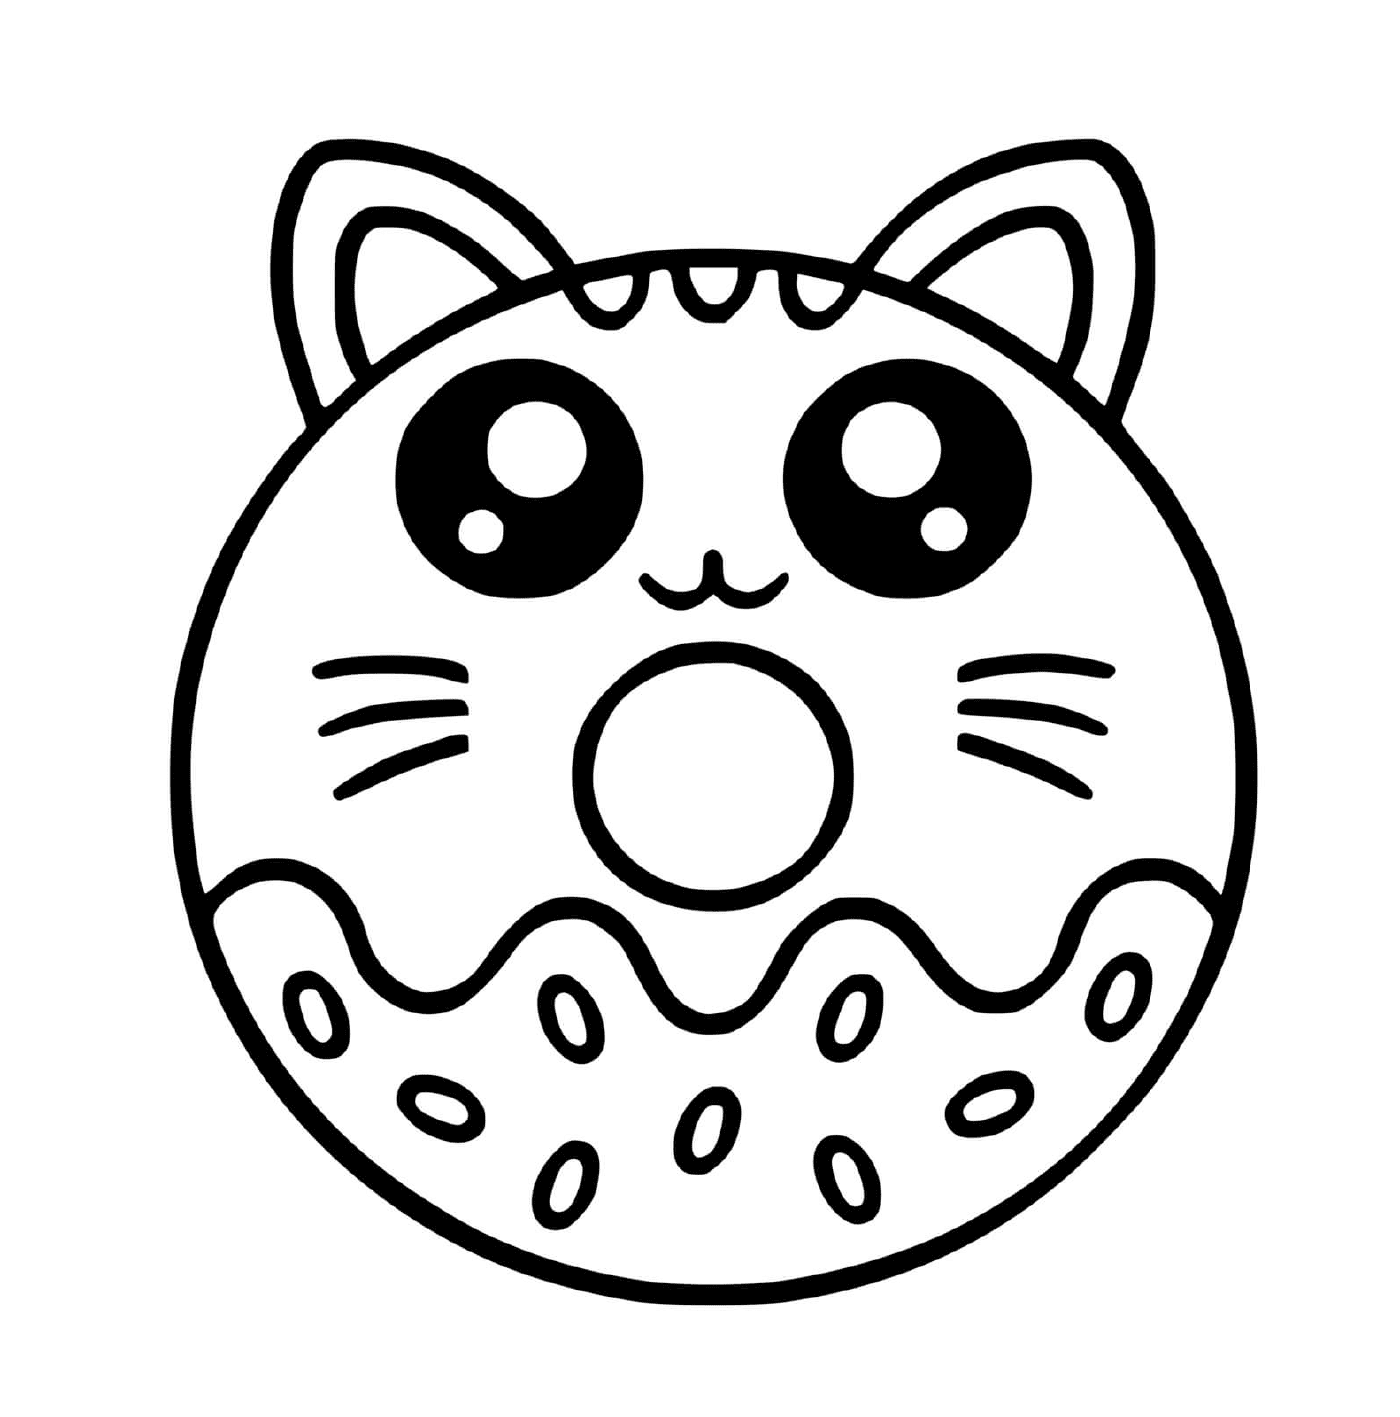  Donut-chat kawaii, lindo gourmand 